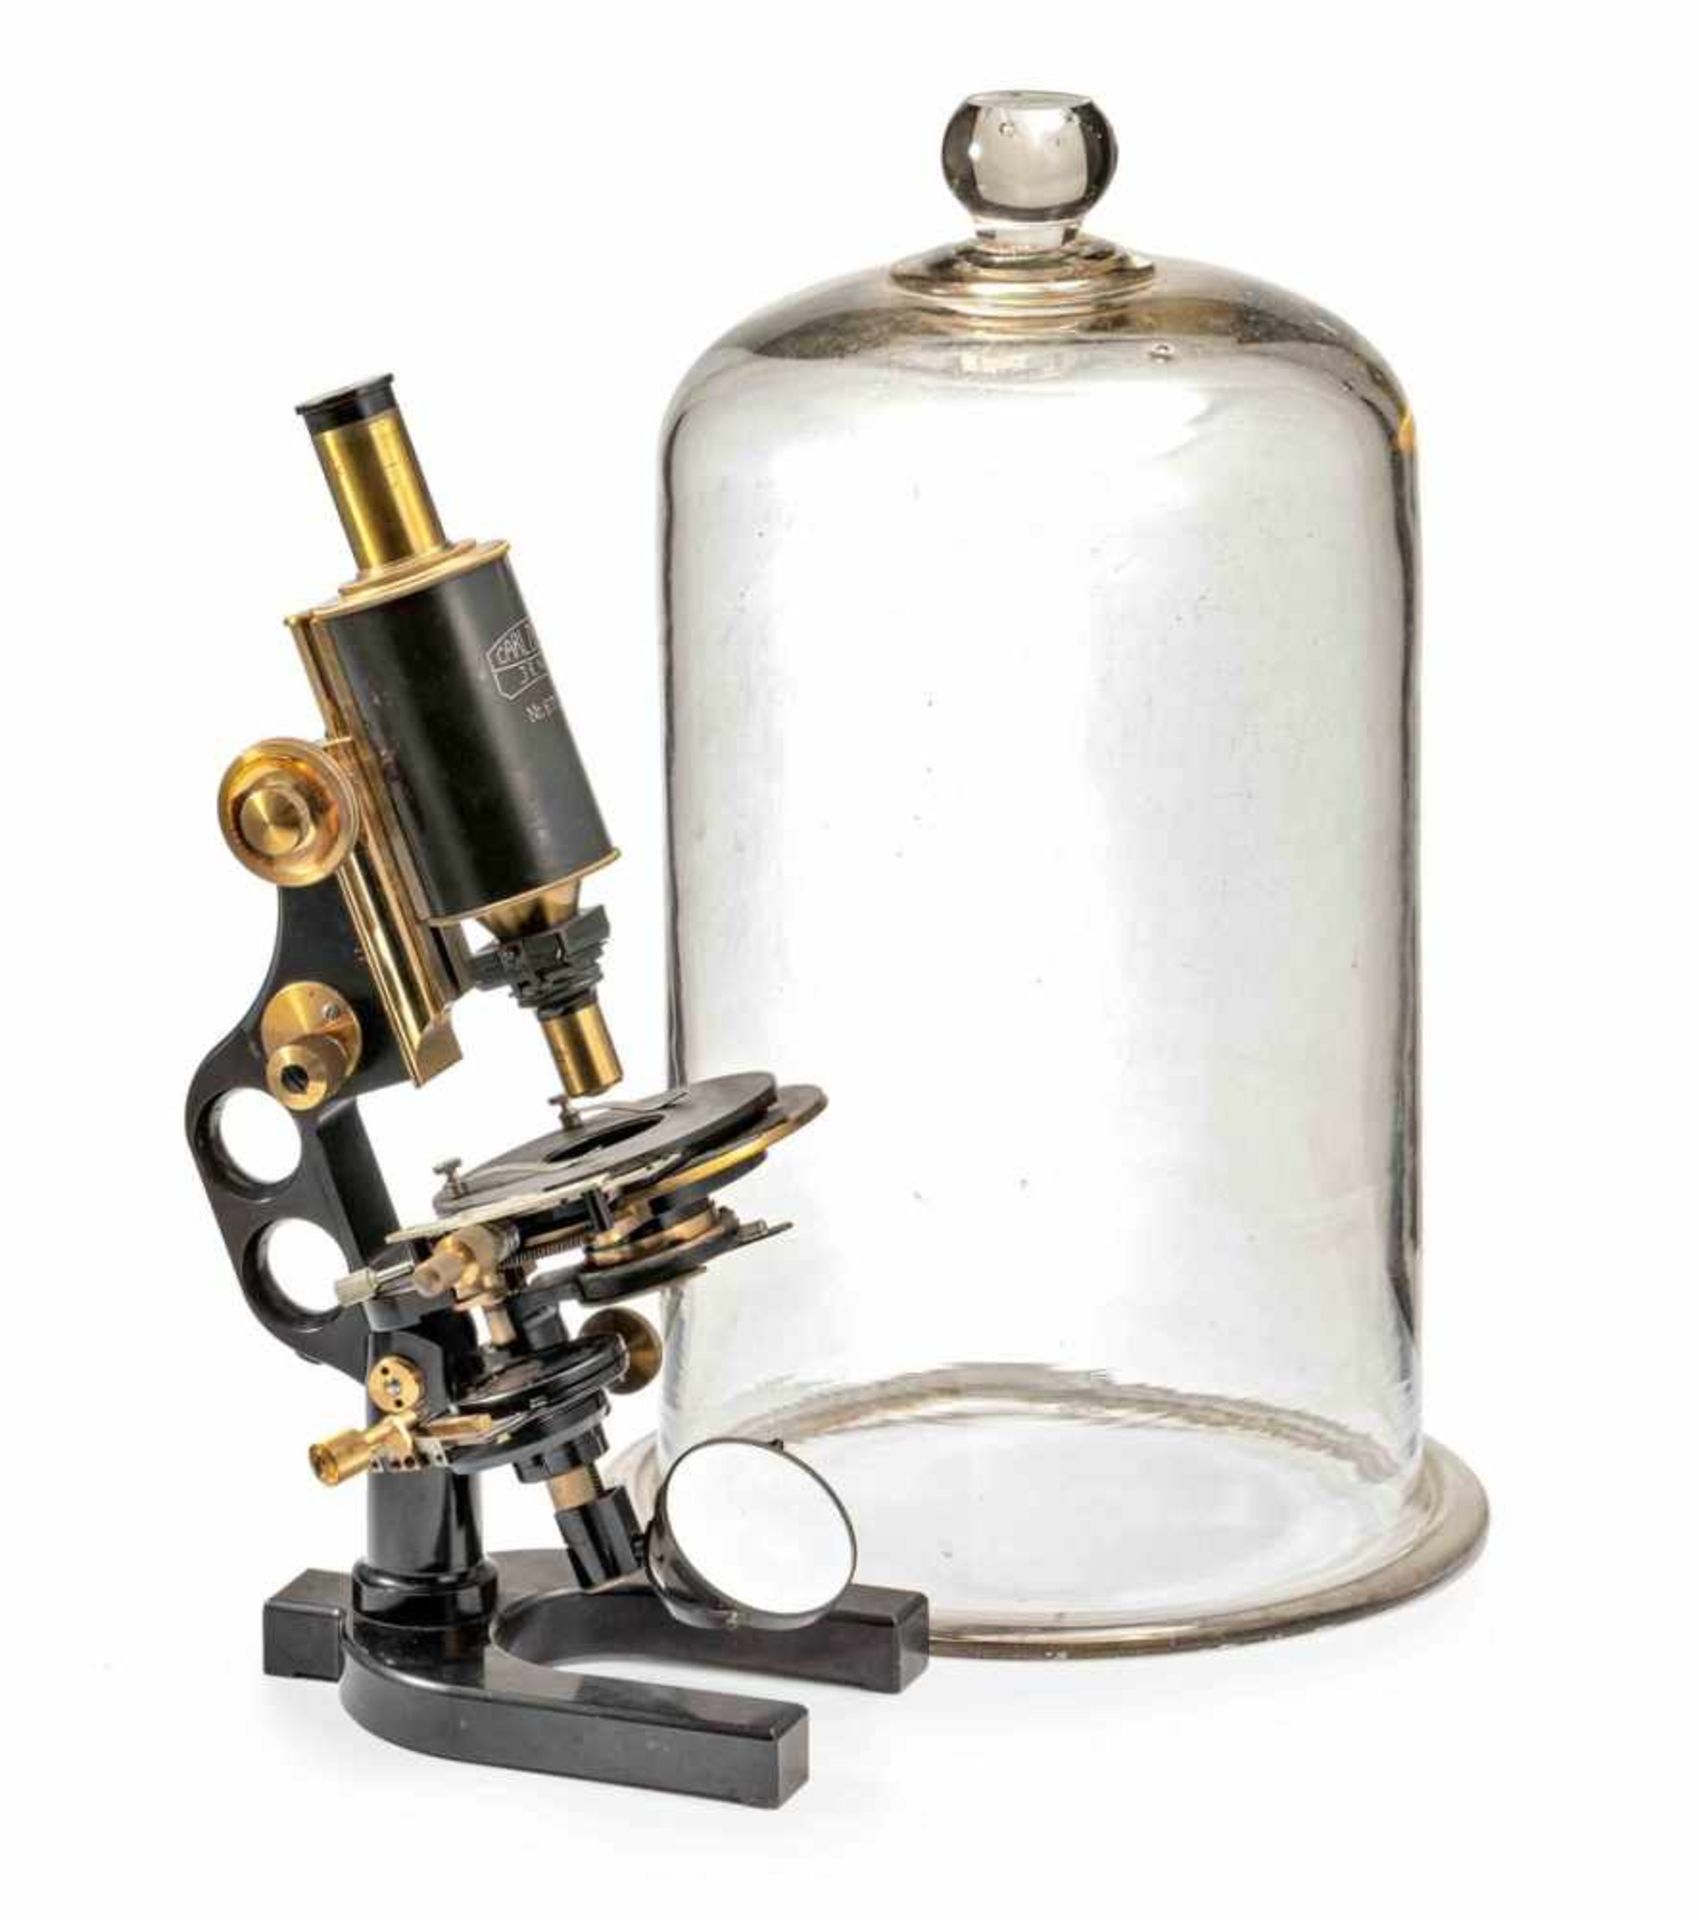 Labor-Mikroskop der Fa. Carl Zeiss, Jena, Nr 67 137um 1910/20Messing, großenteils geschwärzt.